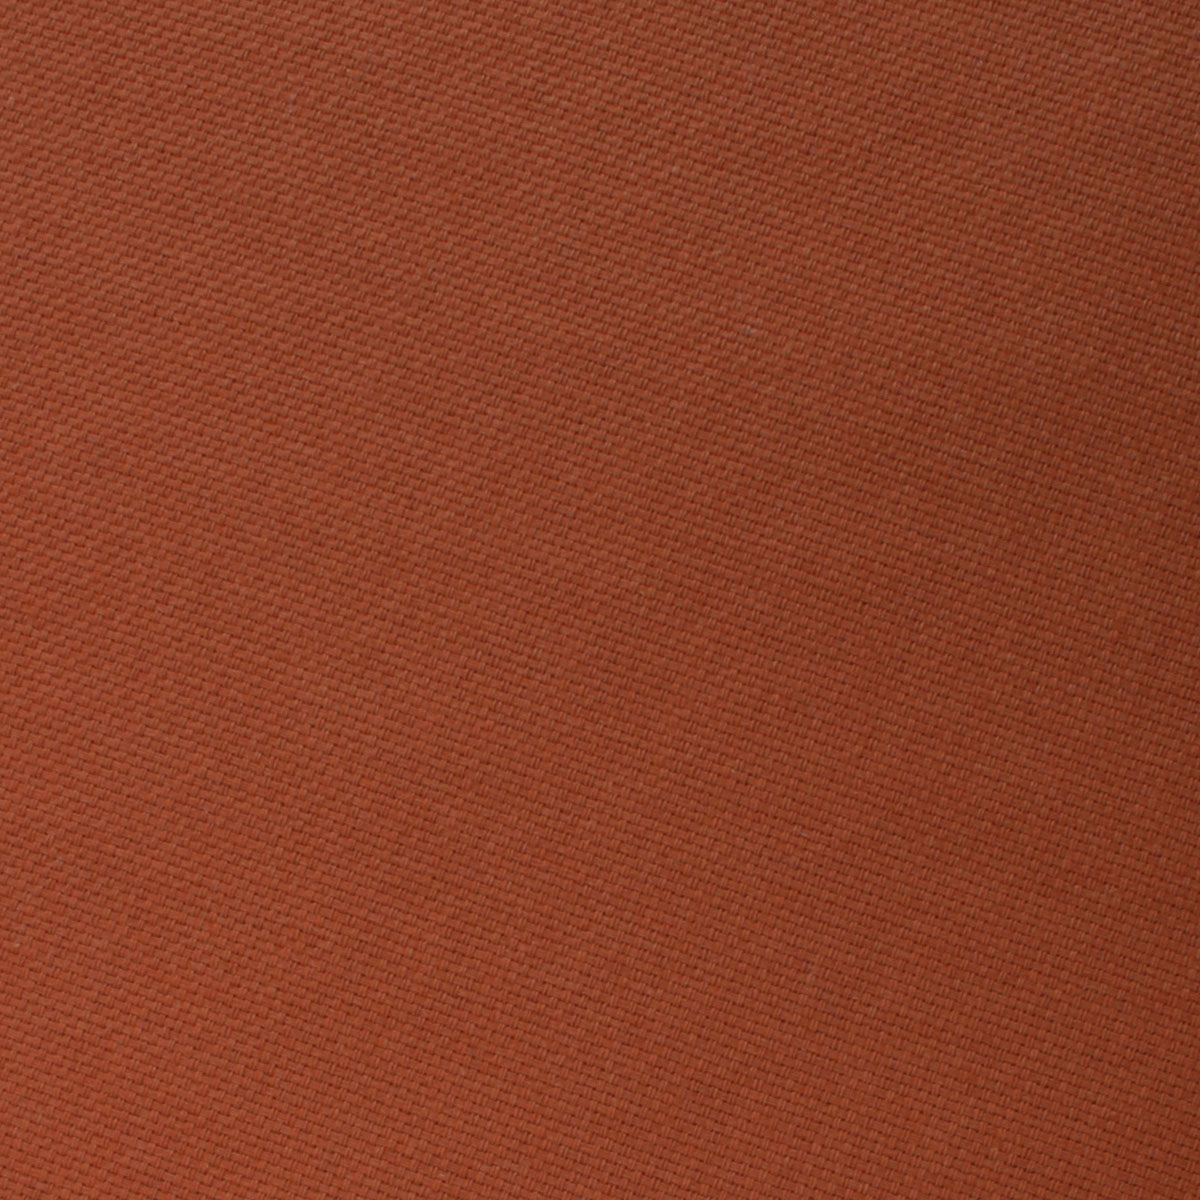 Burnt Terracotta Orange Linen Fabric Swatch